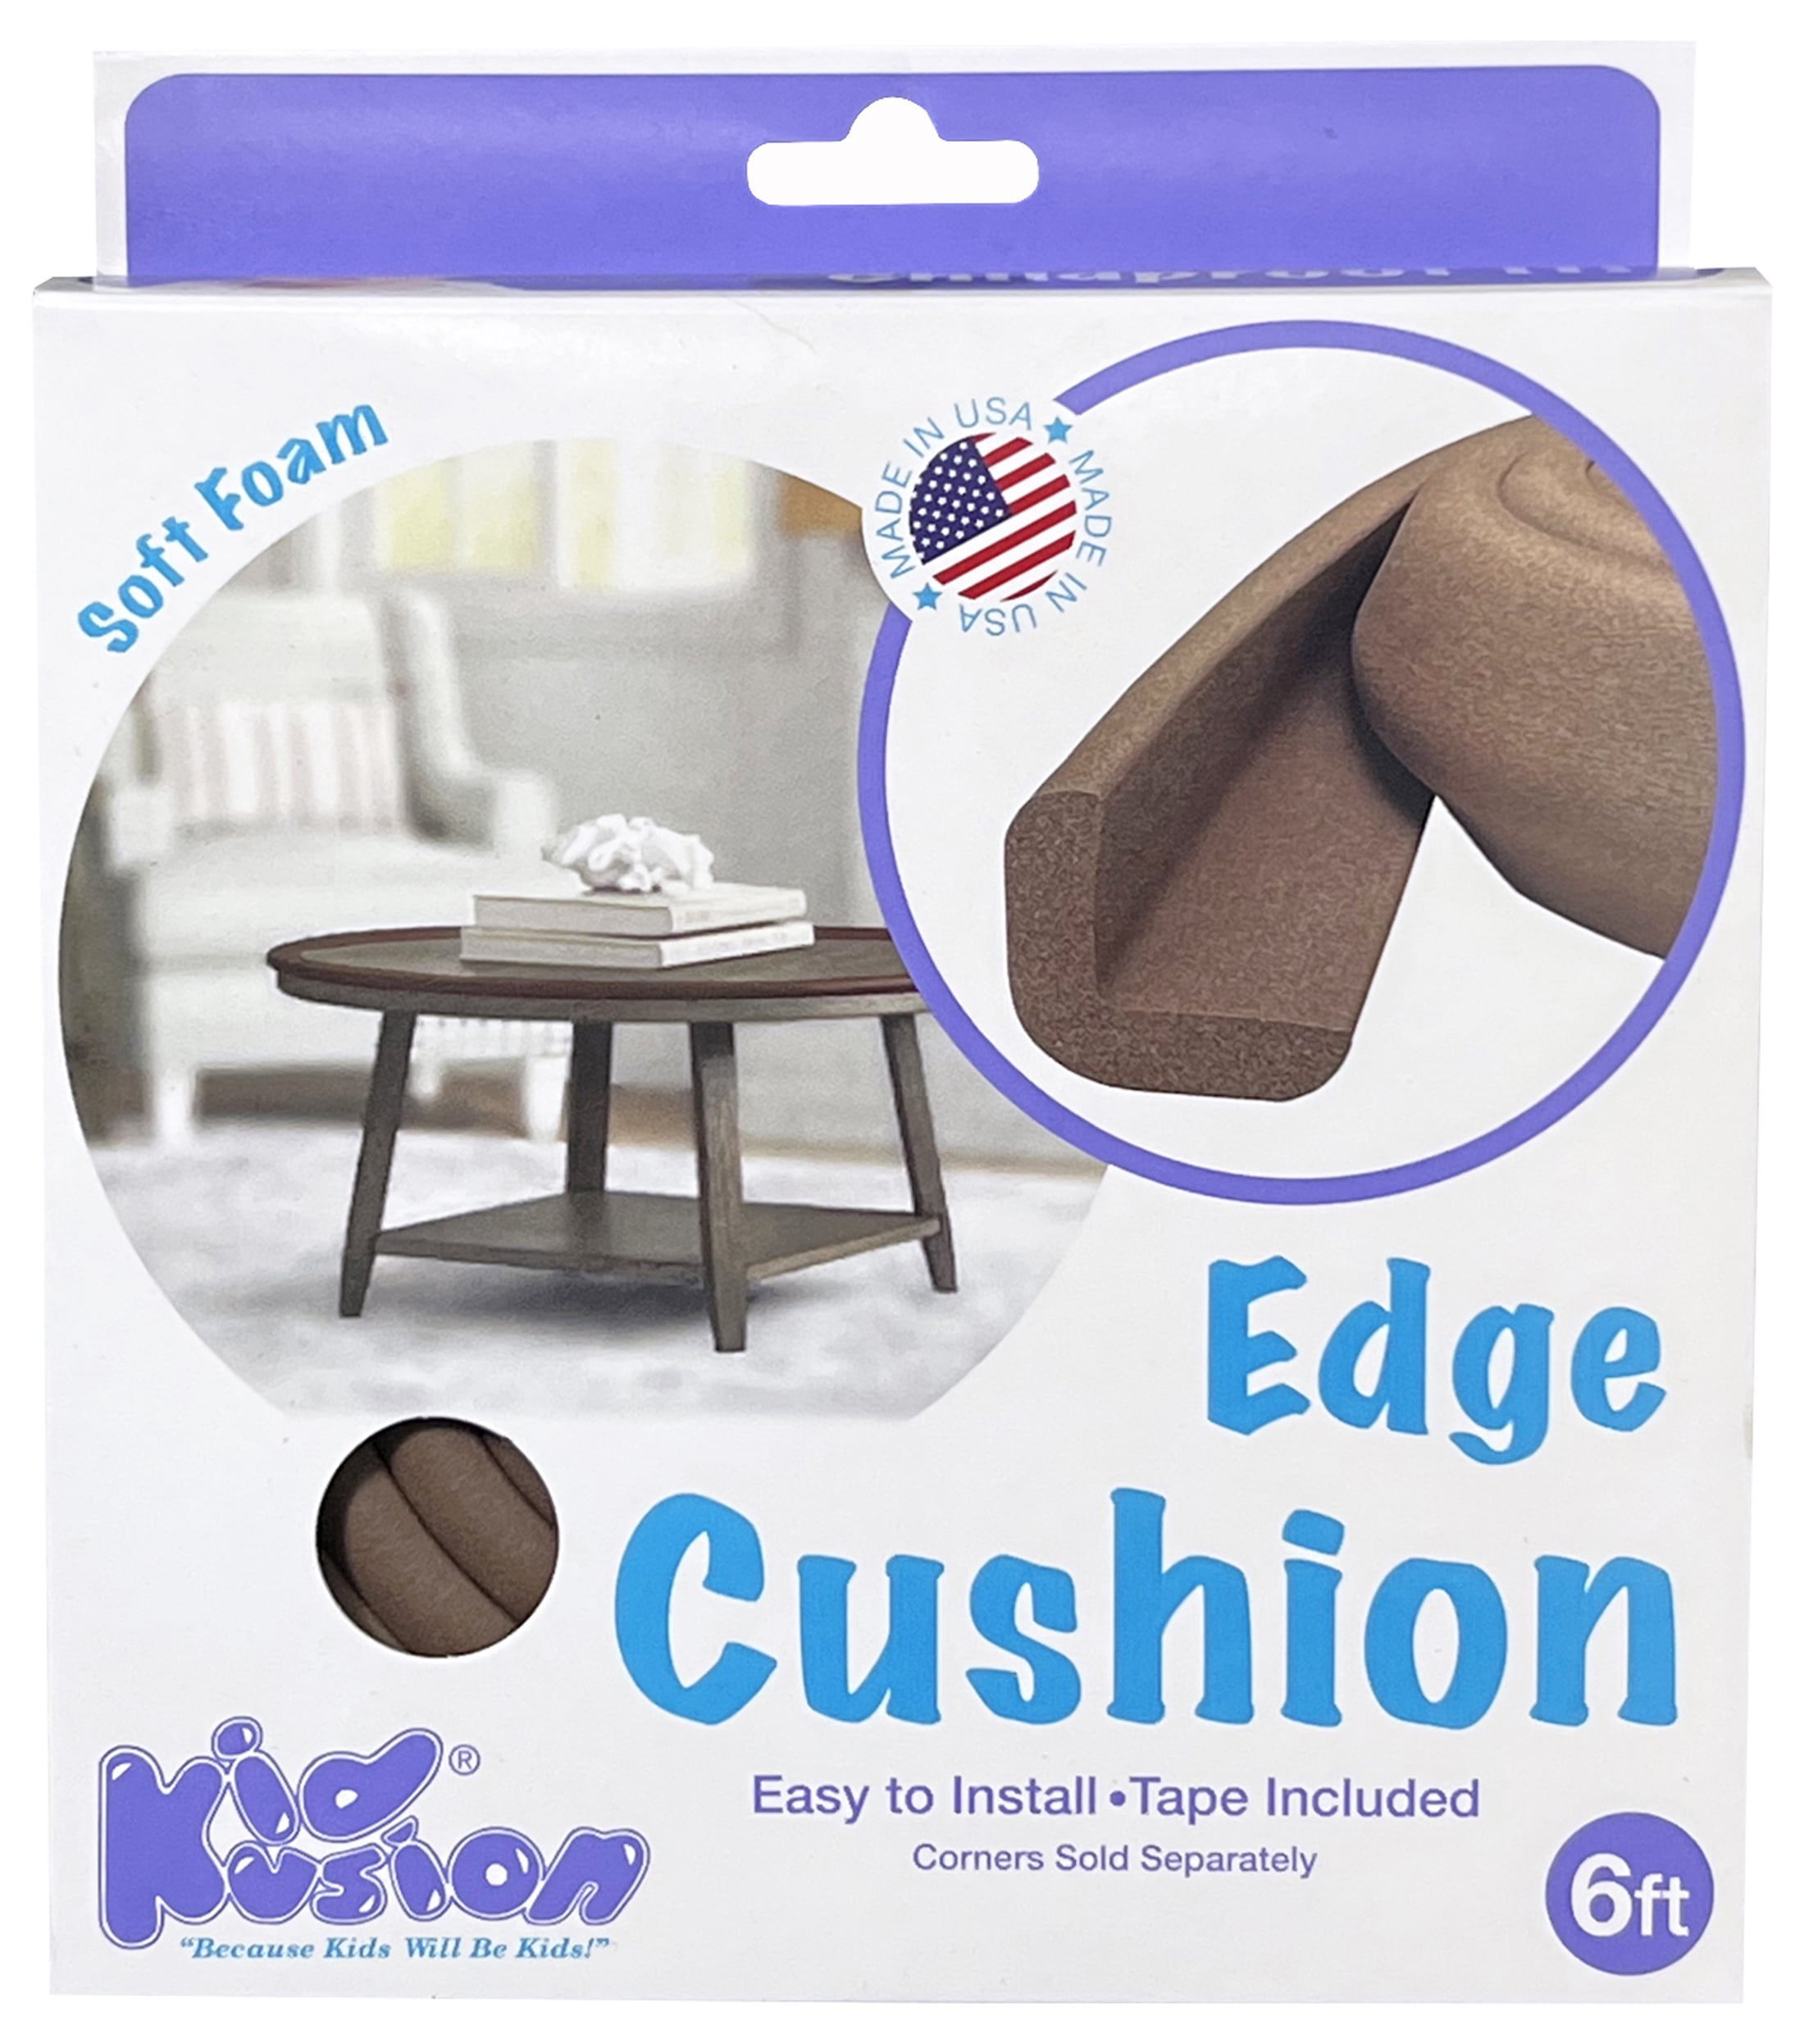 KidKusion Child Safety Corner Cushion - Brown Foam, Adhesive Tape